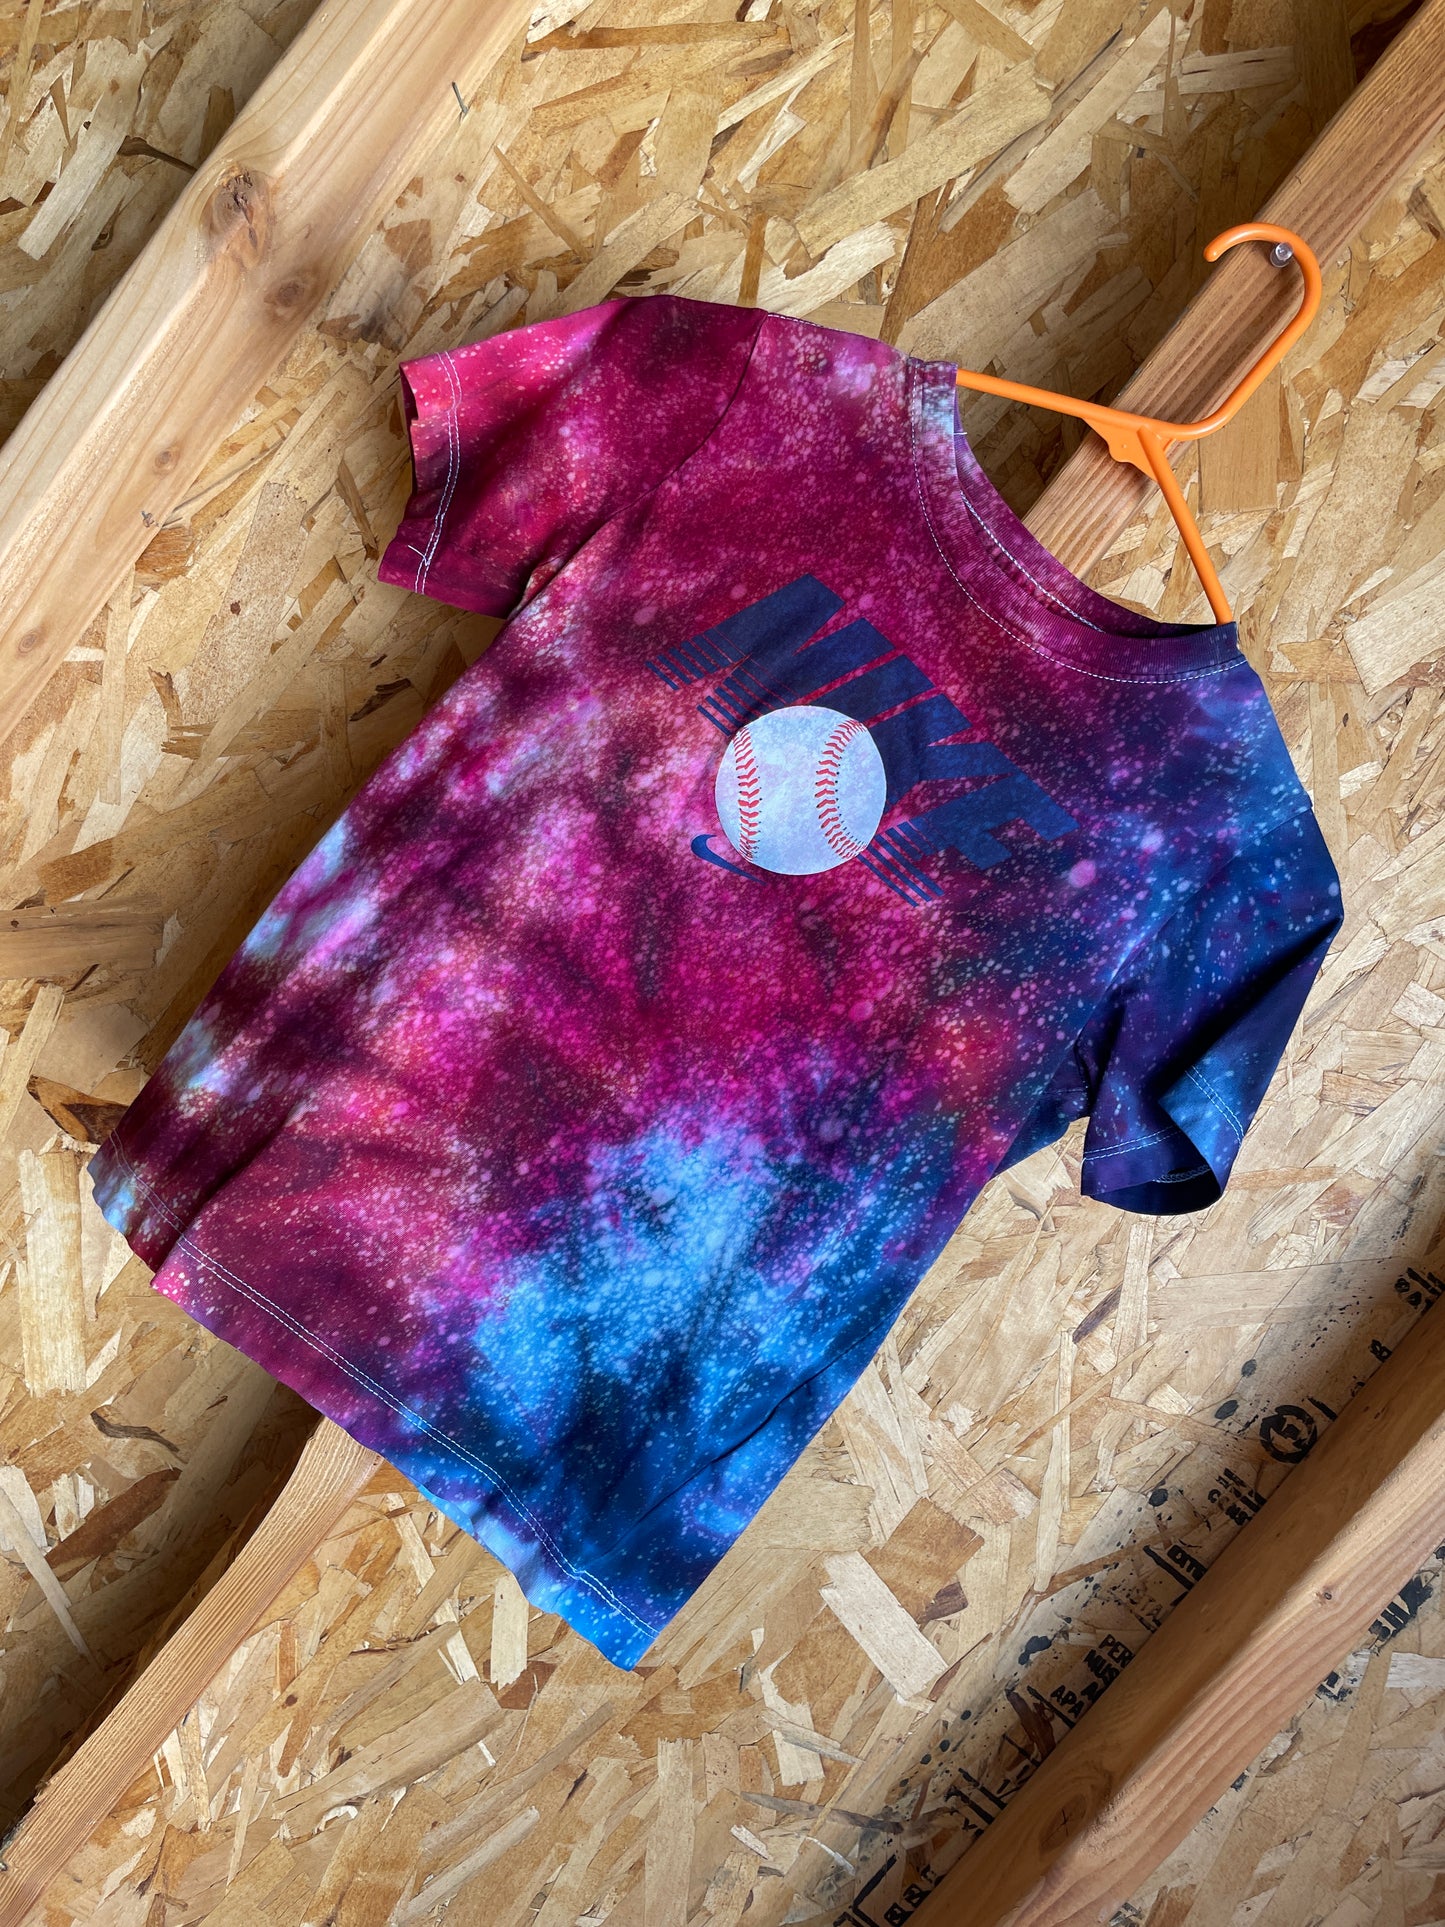 Boy's Medium Nike Baseball Handmade Tie Dye T-Shirt | Cool Tones Galaxy Tie Dye Short Sleeve